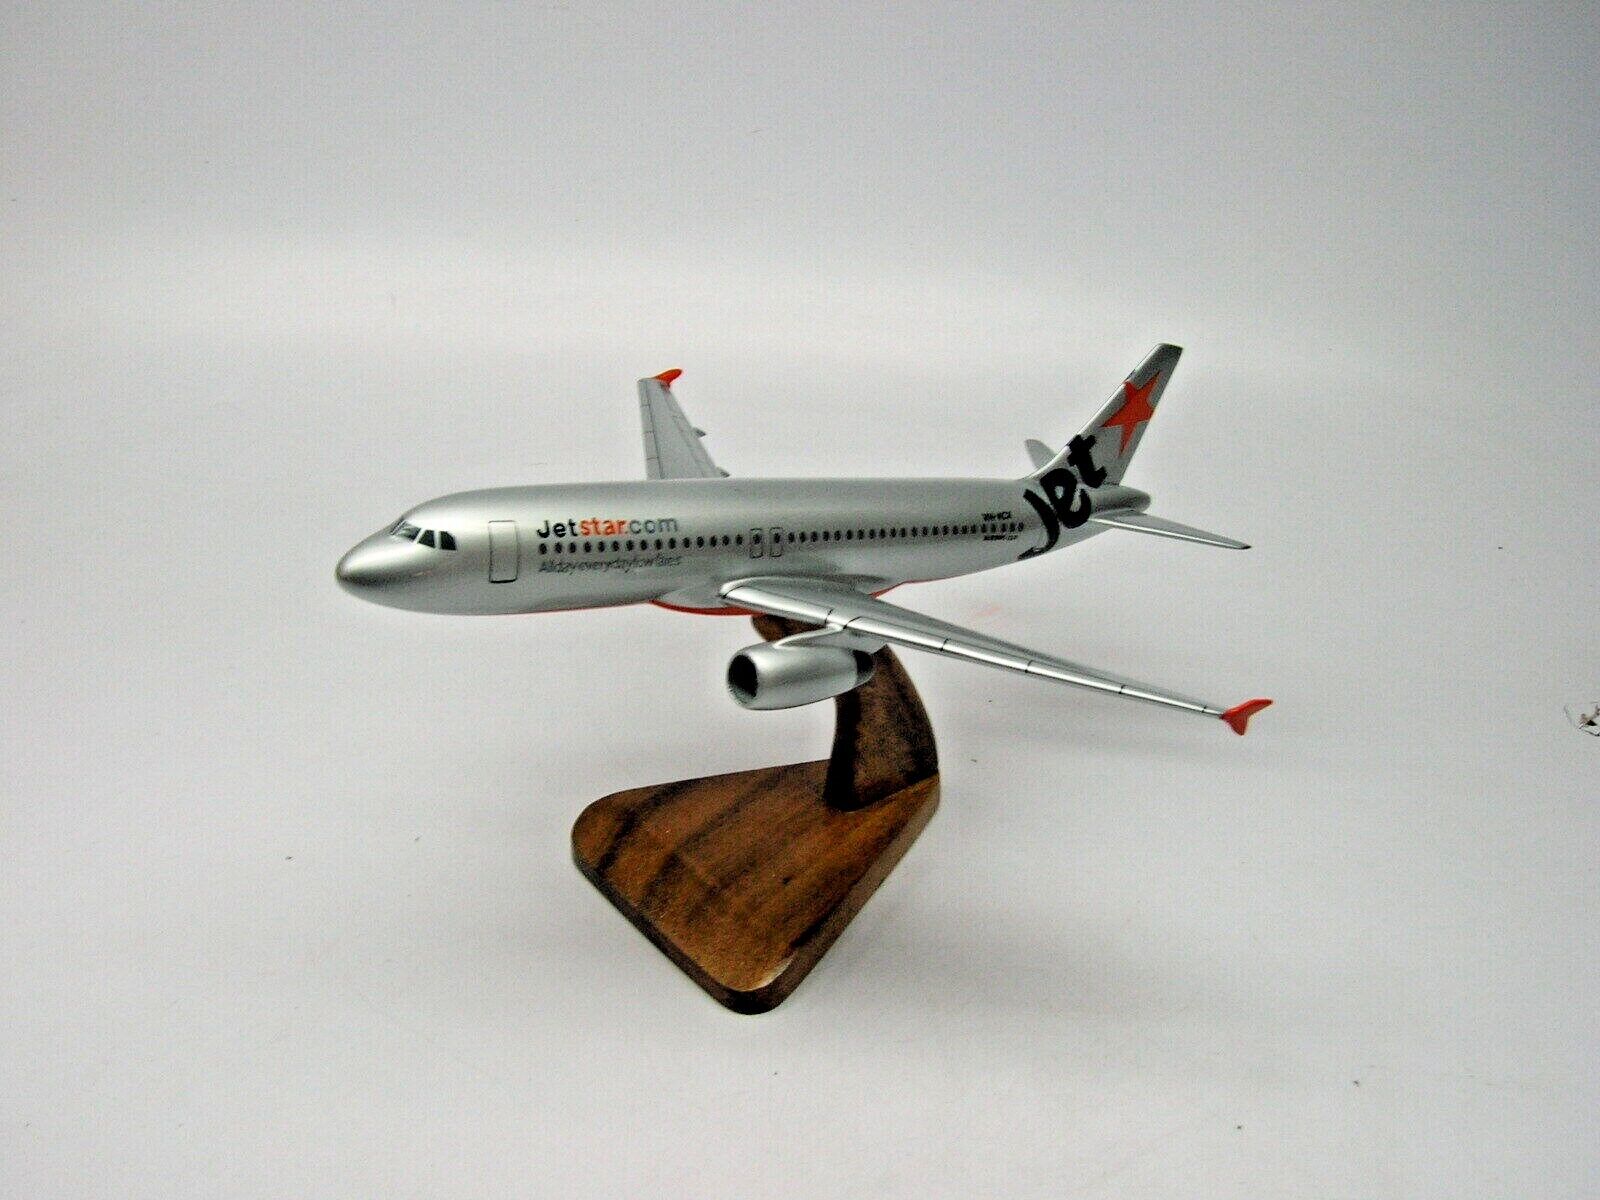  A-320 Jetstar A320 Aircraft Desktop Mahogany Kiln Dried Wood Model Small New